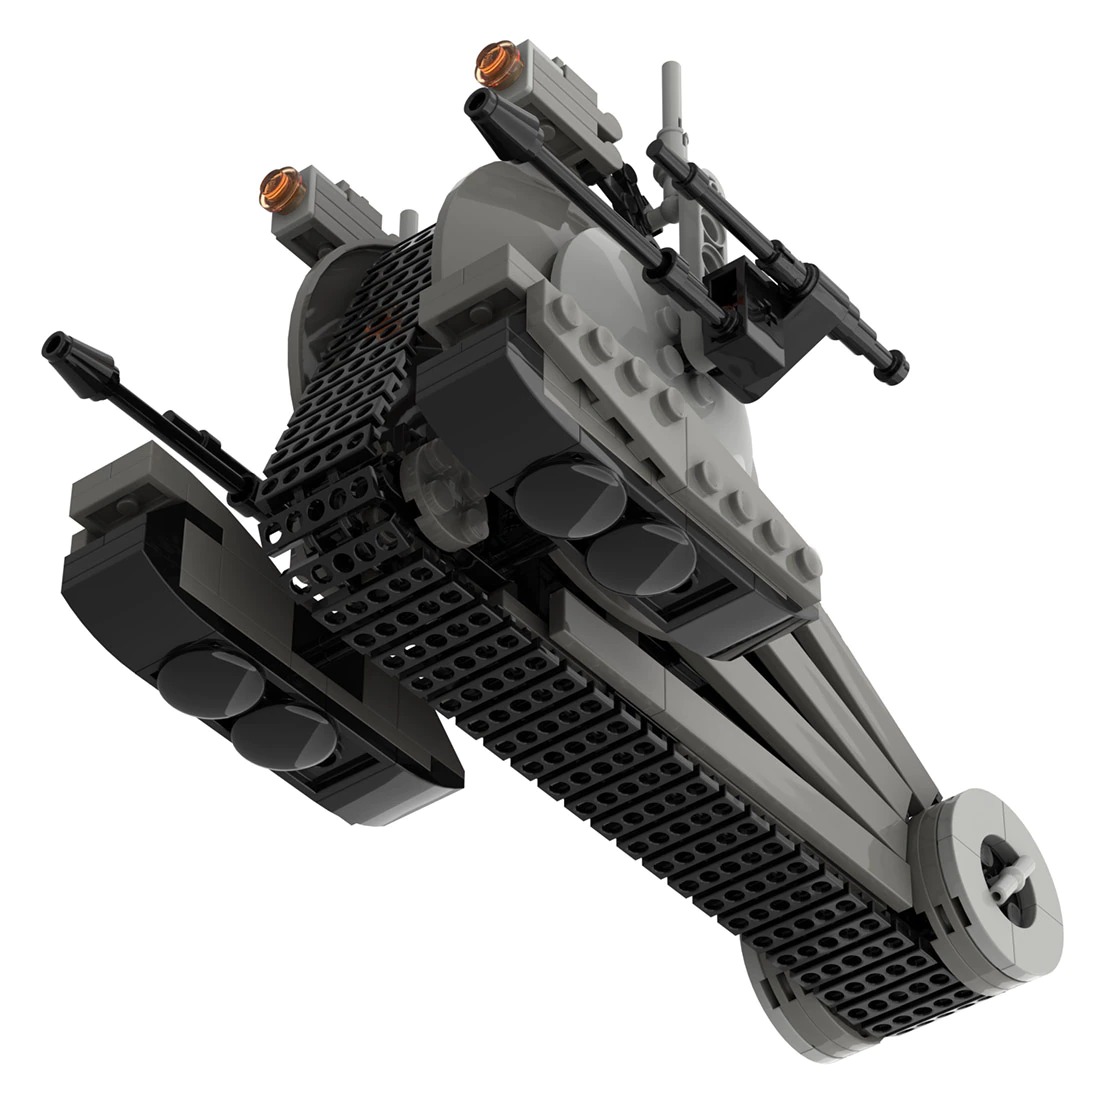 Separatist NR-N99 Droid Tank MOC-102664 Star Wars With 266PCS